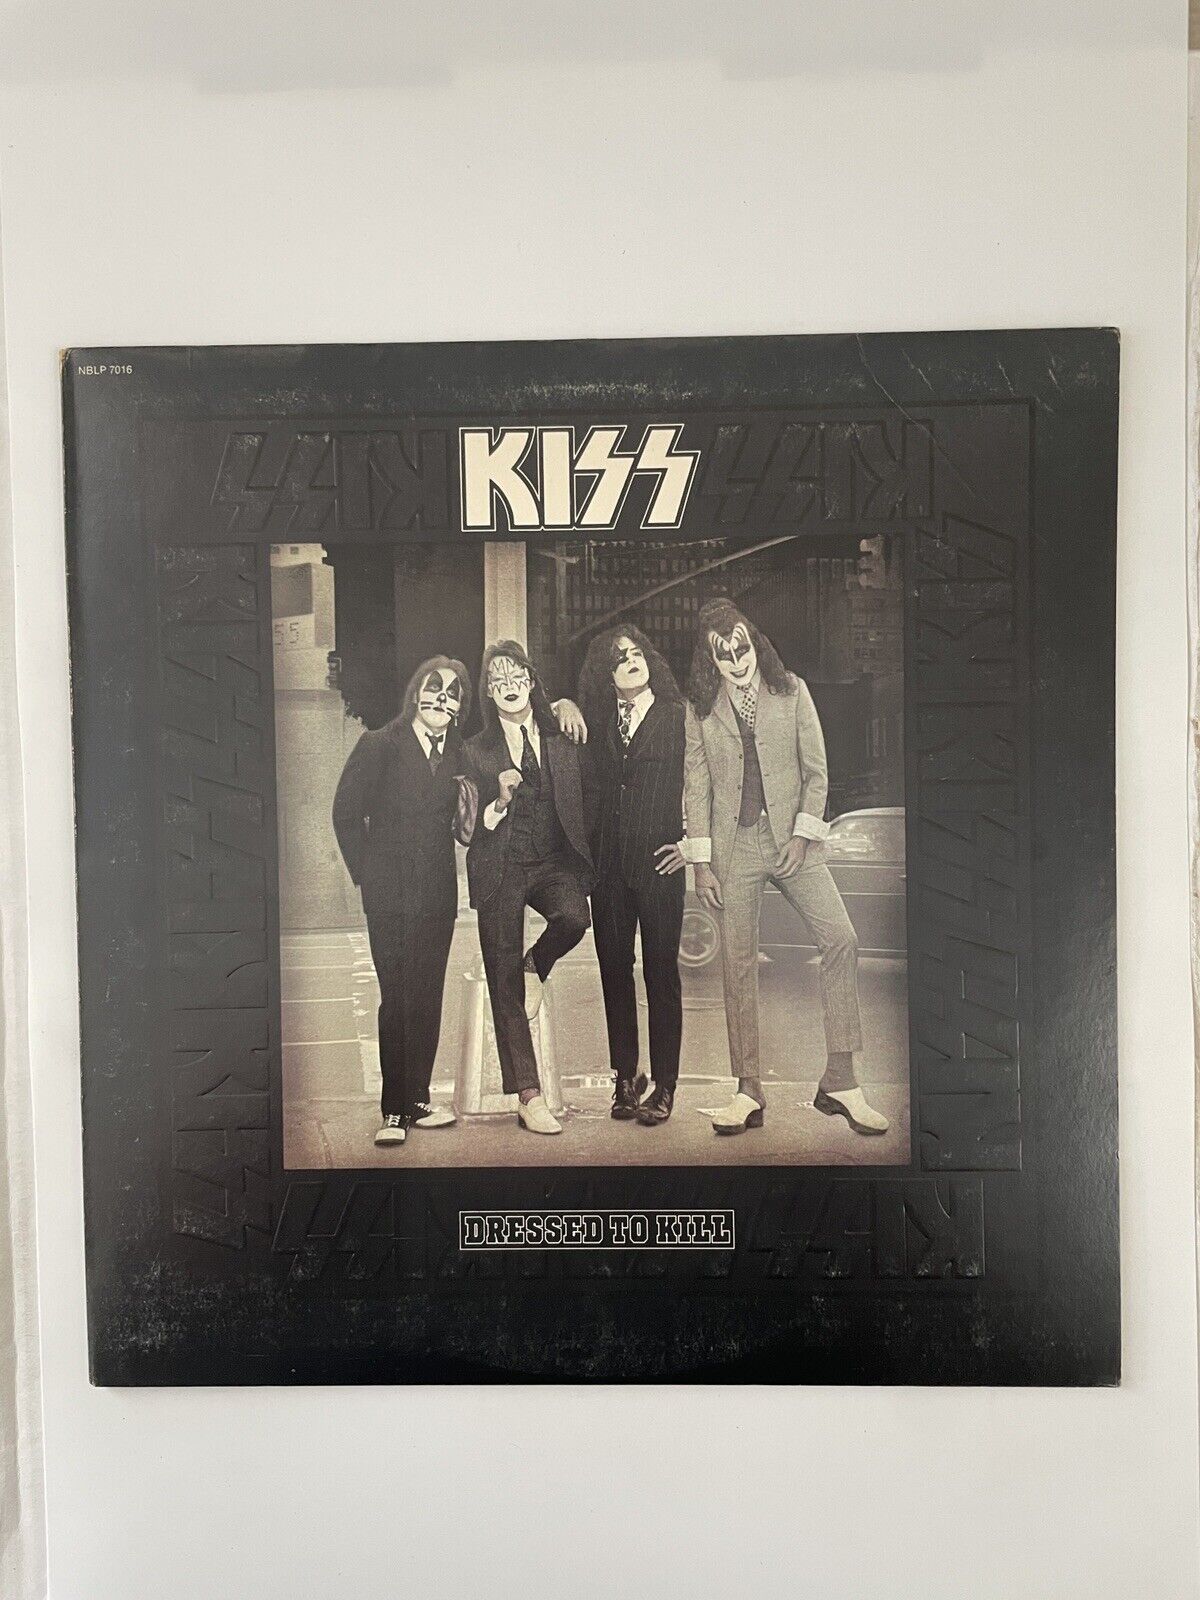 Kiss - Dressed To Kill - Original 1975 Casablanca NBLP 7016 LP Record E